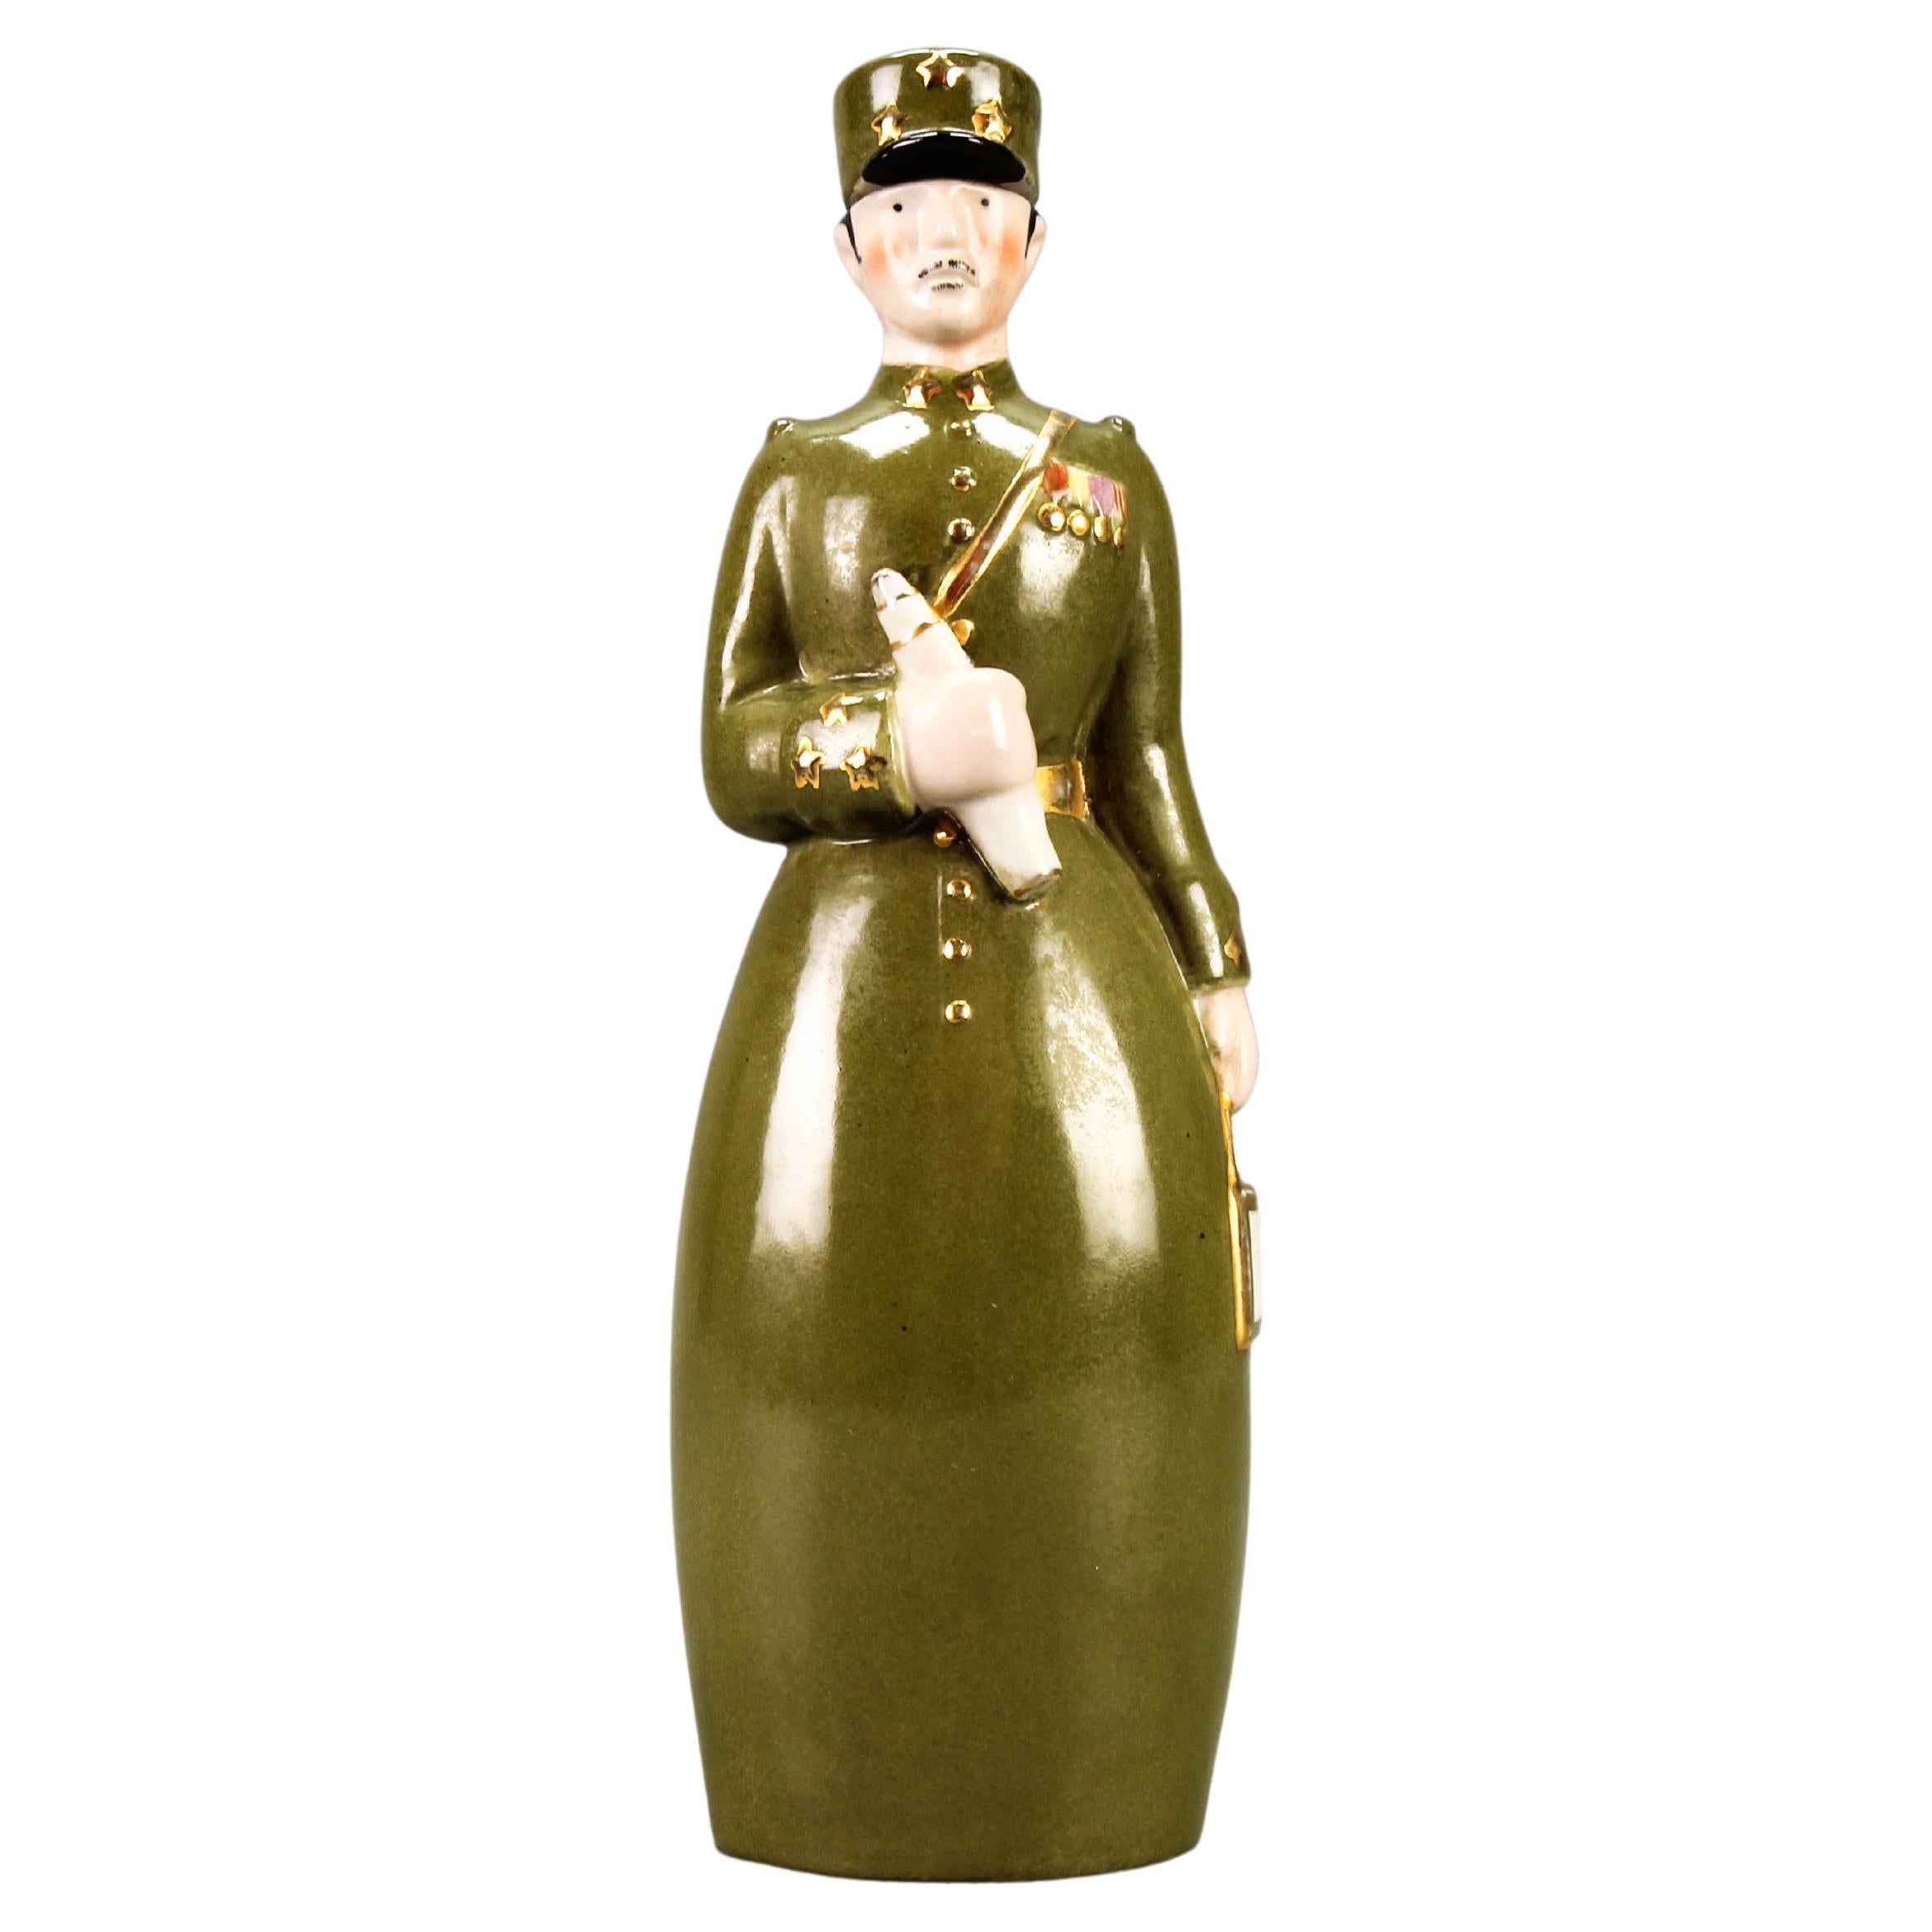  French Art Deco Ceramic Figural Bottle Brigadier General by Robj Paris, 1920s